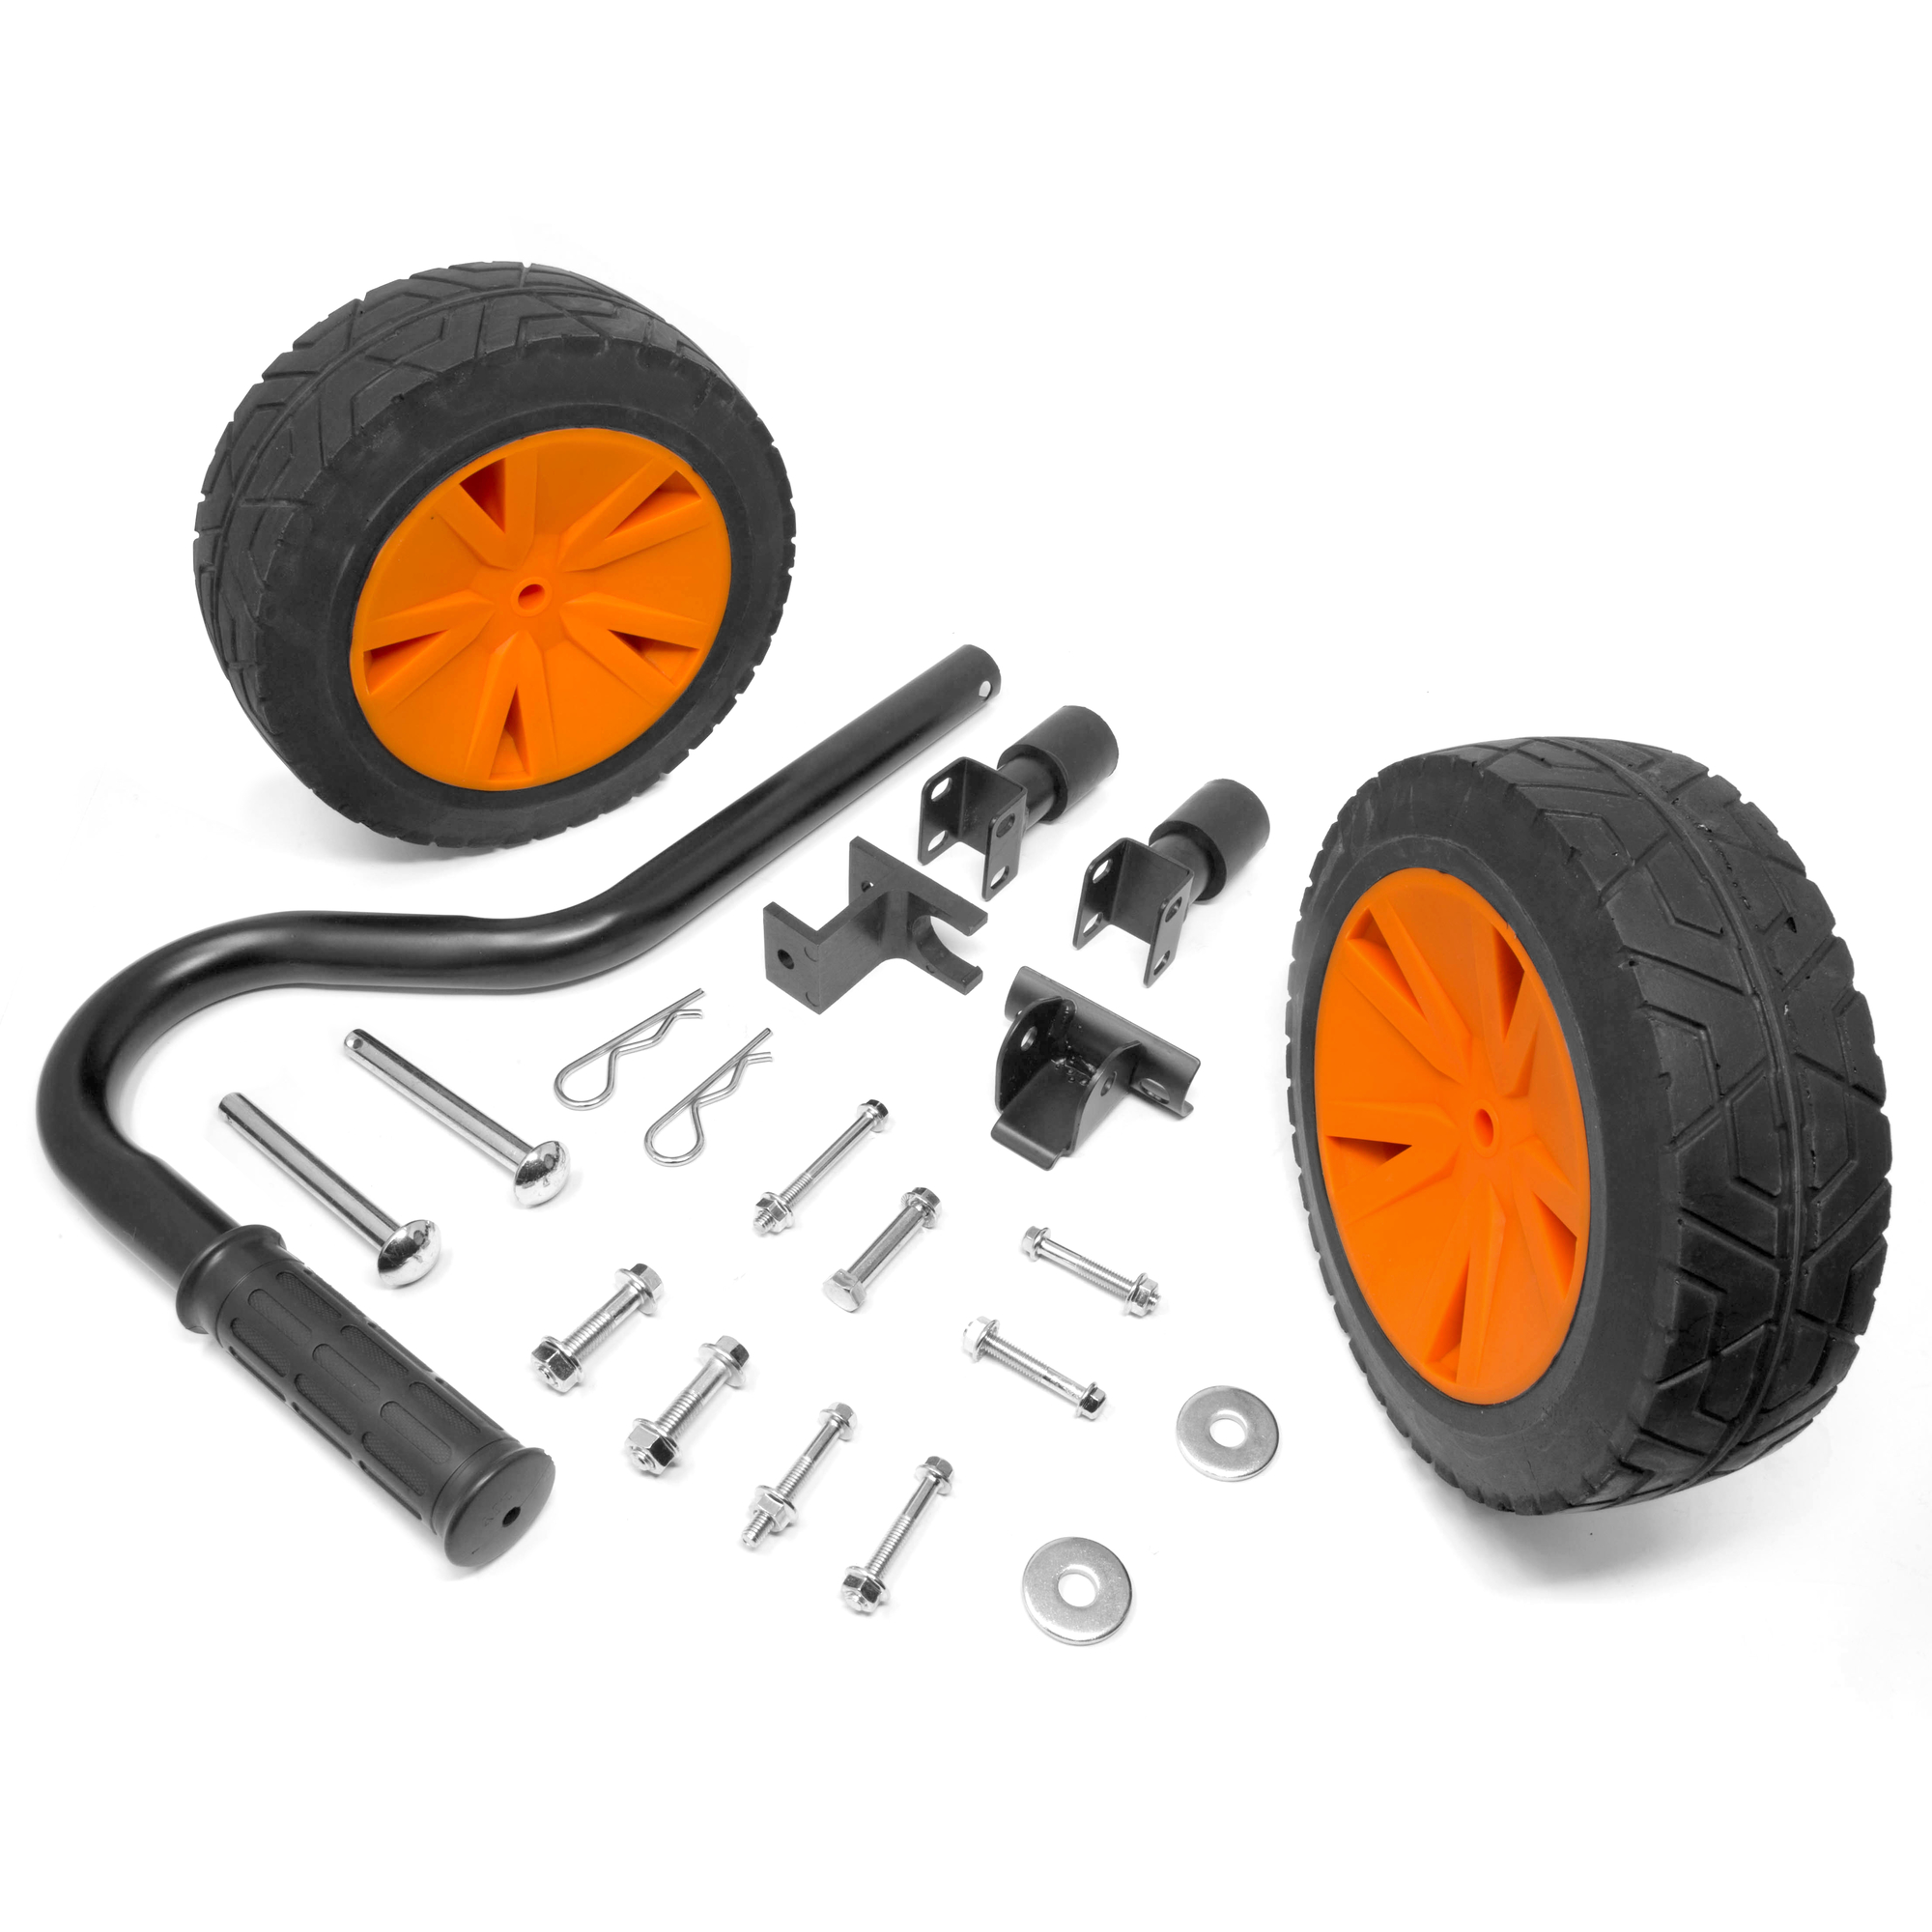 WEN, Generator Wheel and Handle Kit, Wheels (qty.) 2 Wheel Size 8 in, Wheel Material Flat-Free, Model GNA410